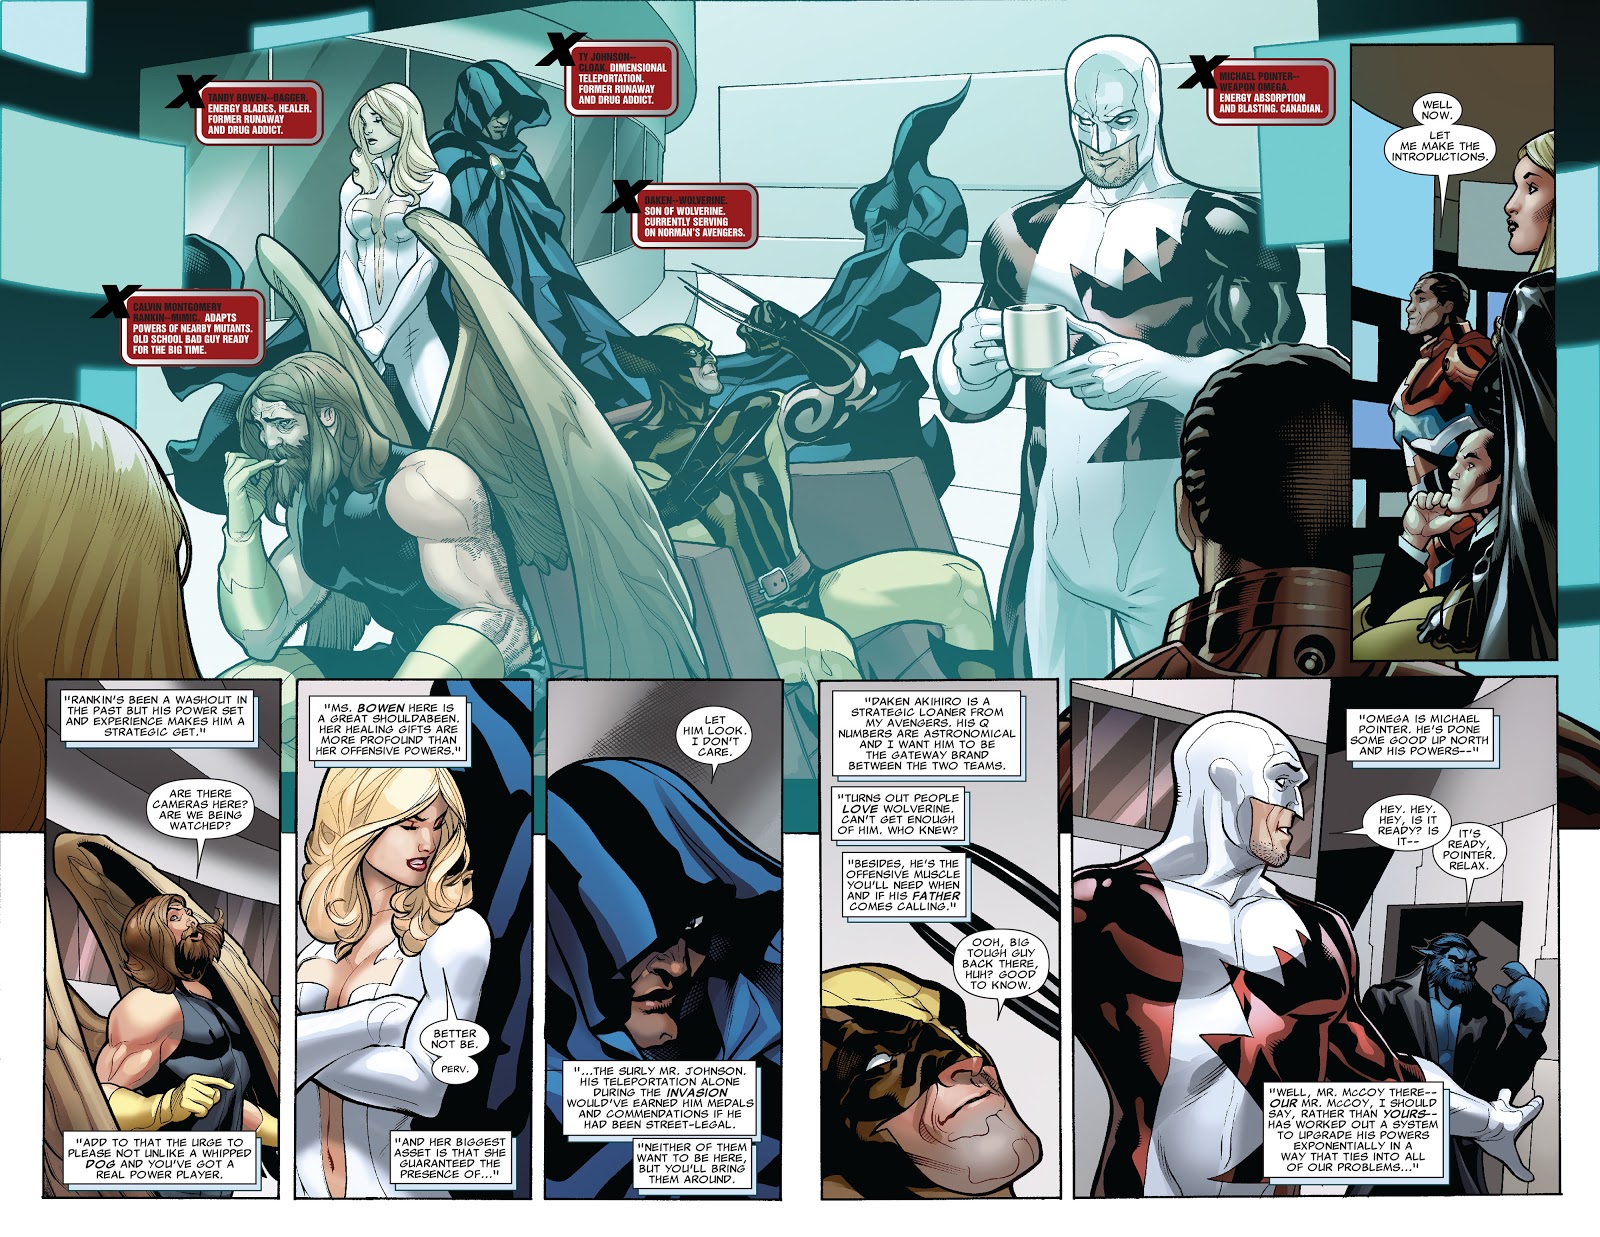 Norman Osborn's Dark X-Men